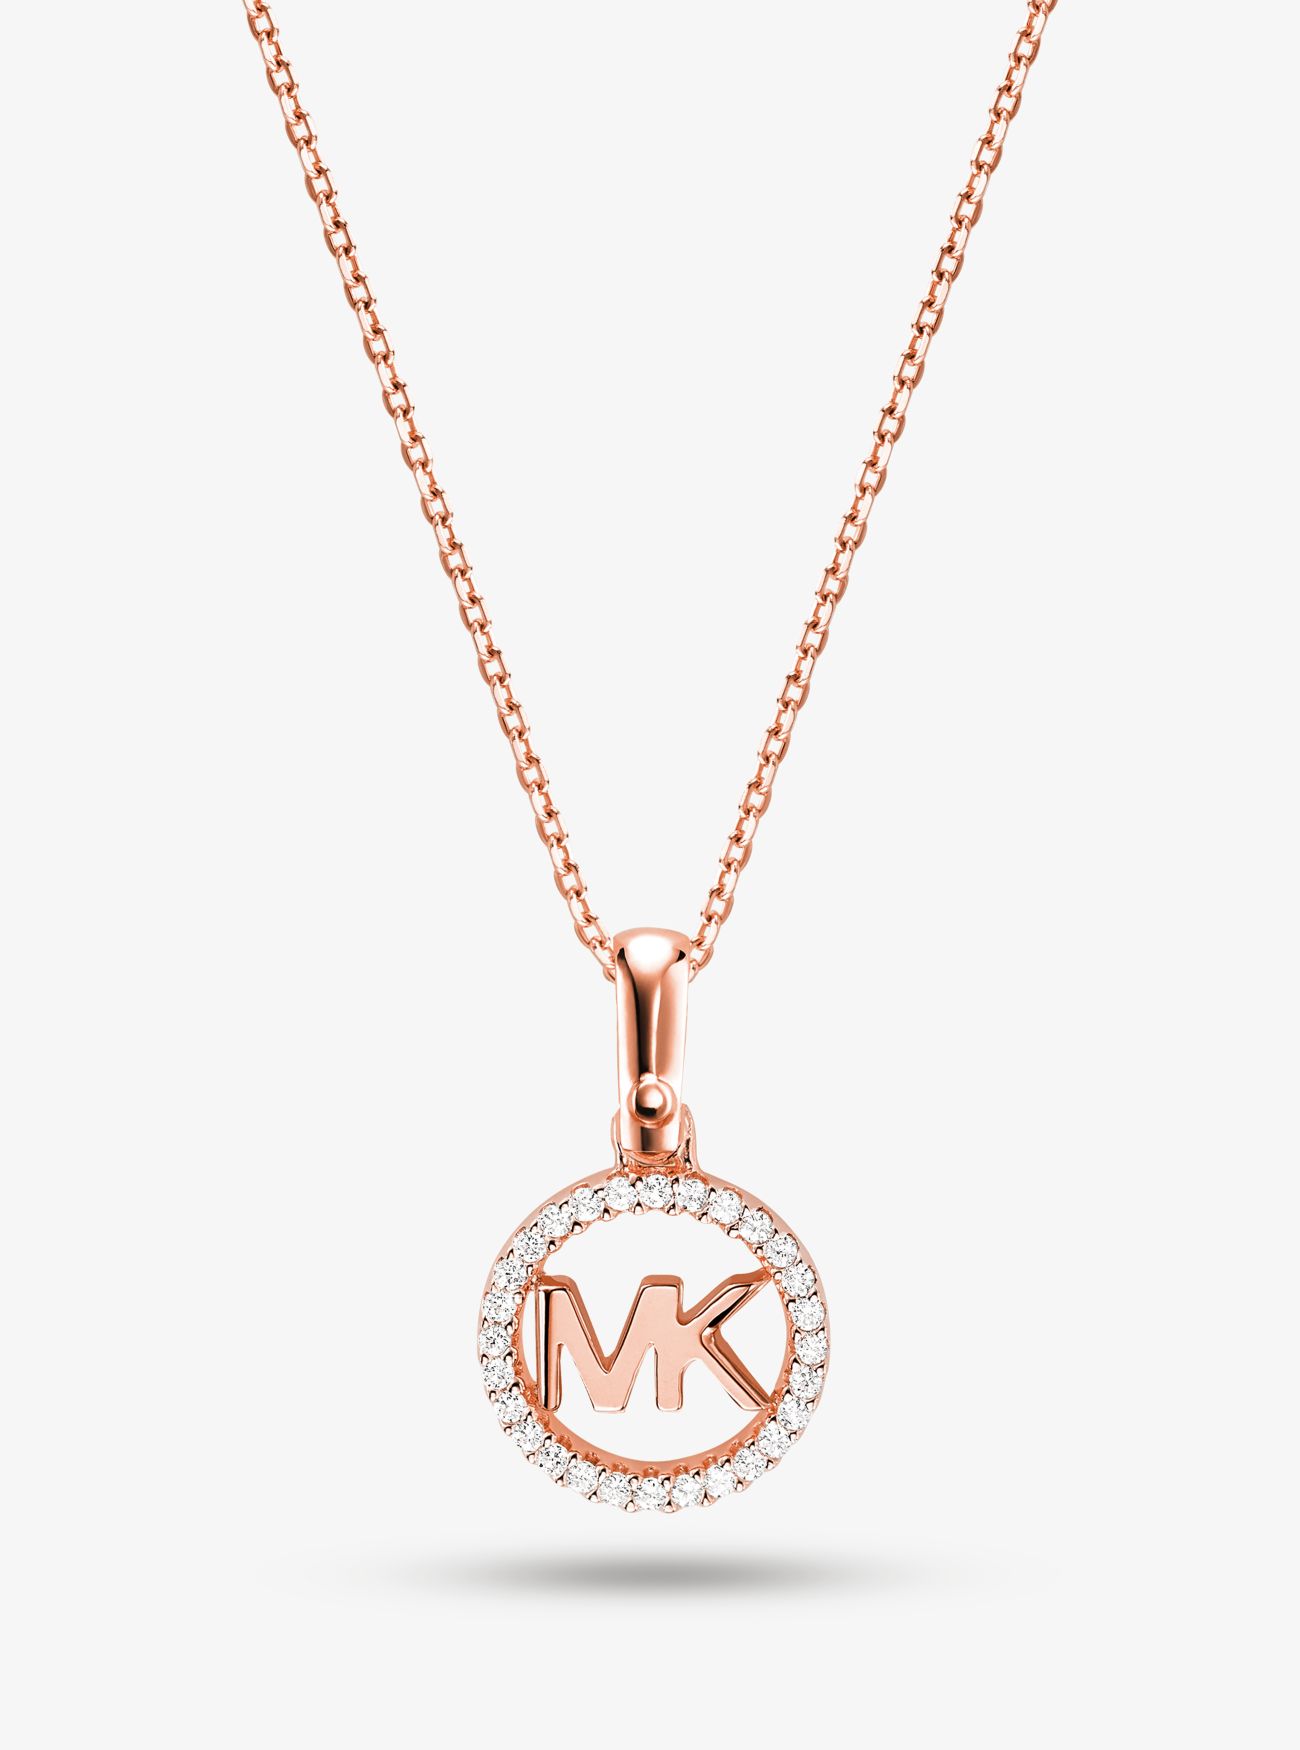 MK Precious Metal-Plated PavÃ© Logo Charm Necklace - Rose Gold - Michael Kors